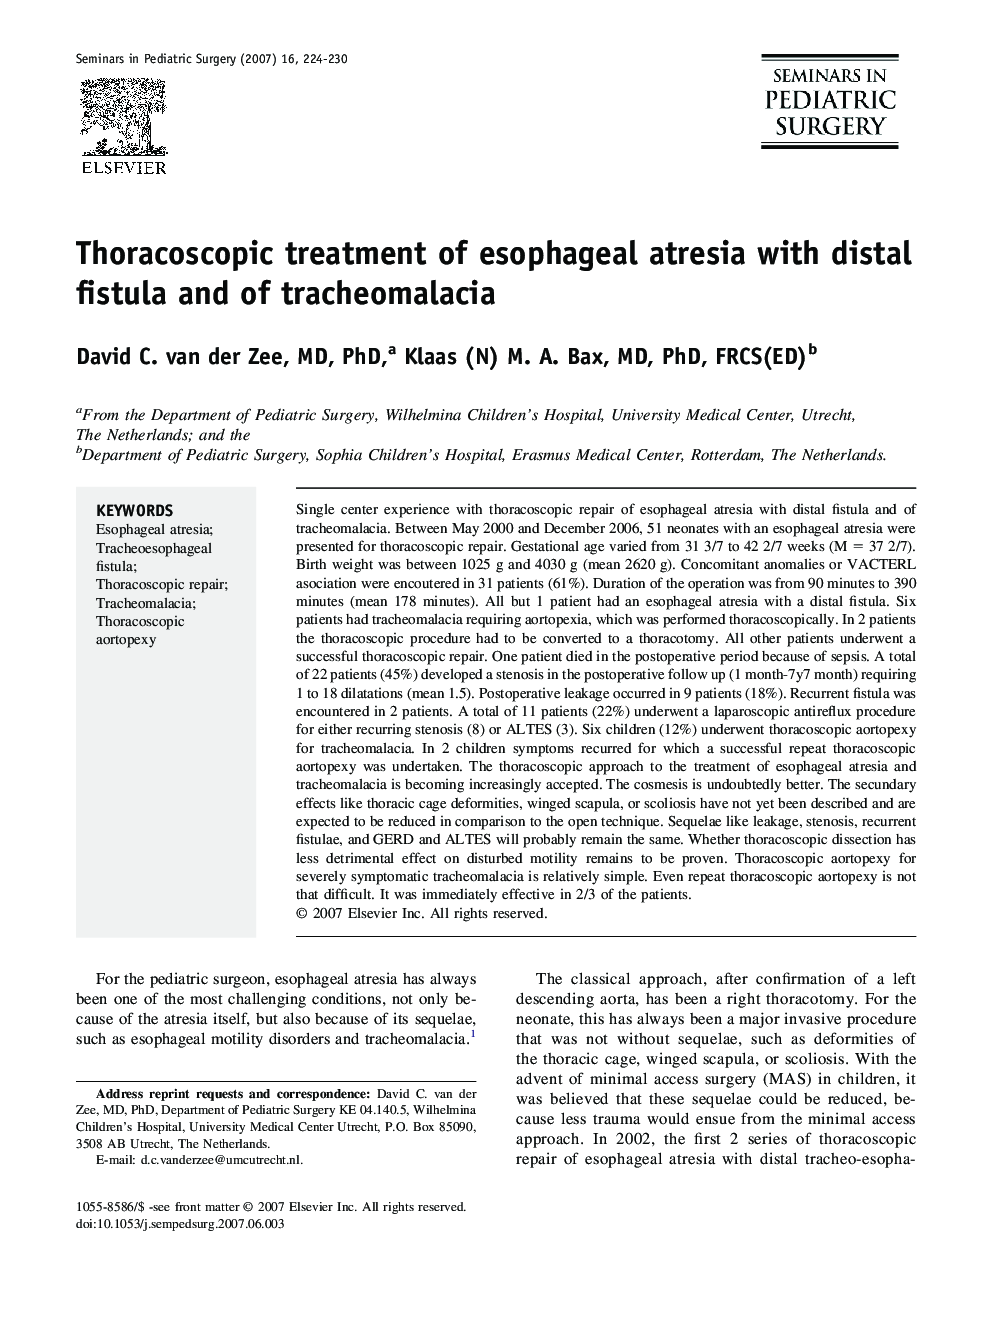 Thoracoscopic treatment of esophageal atresia with distal fistula and of tracheomalacia